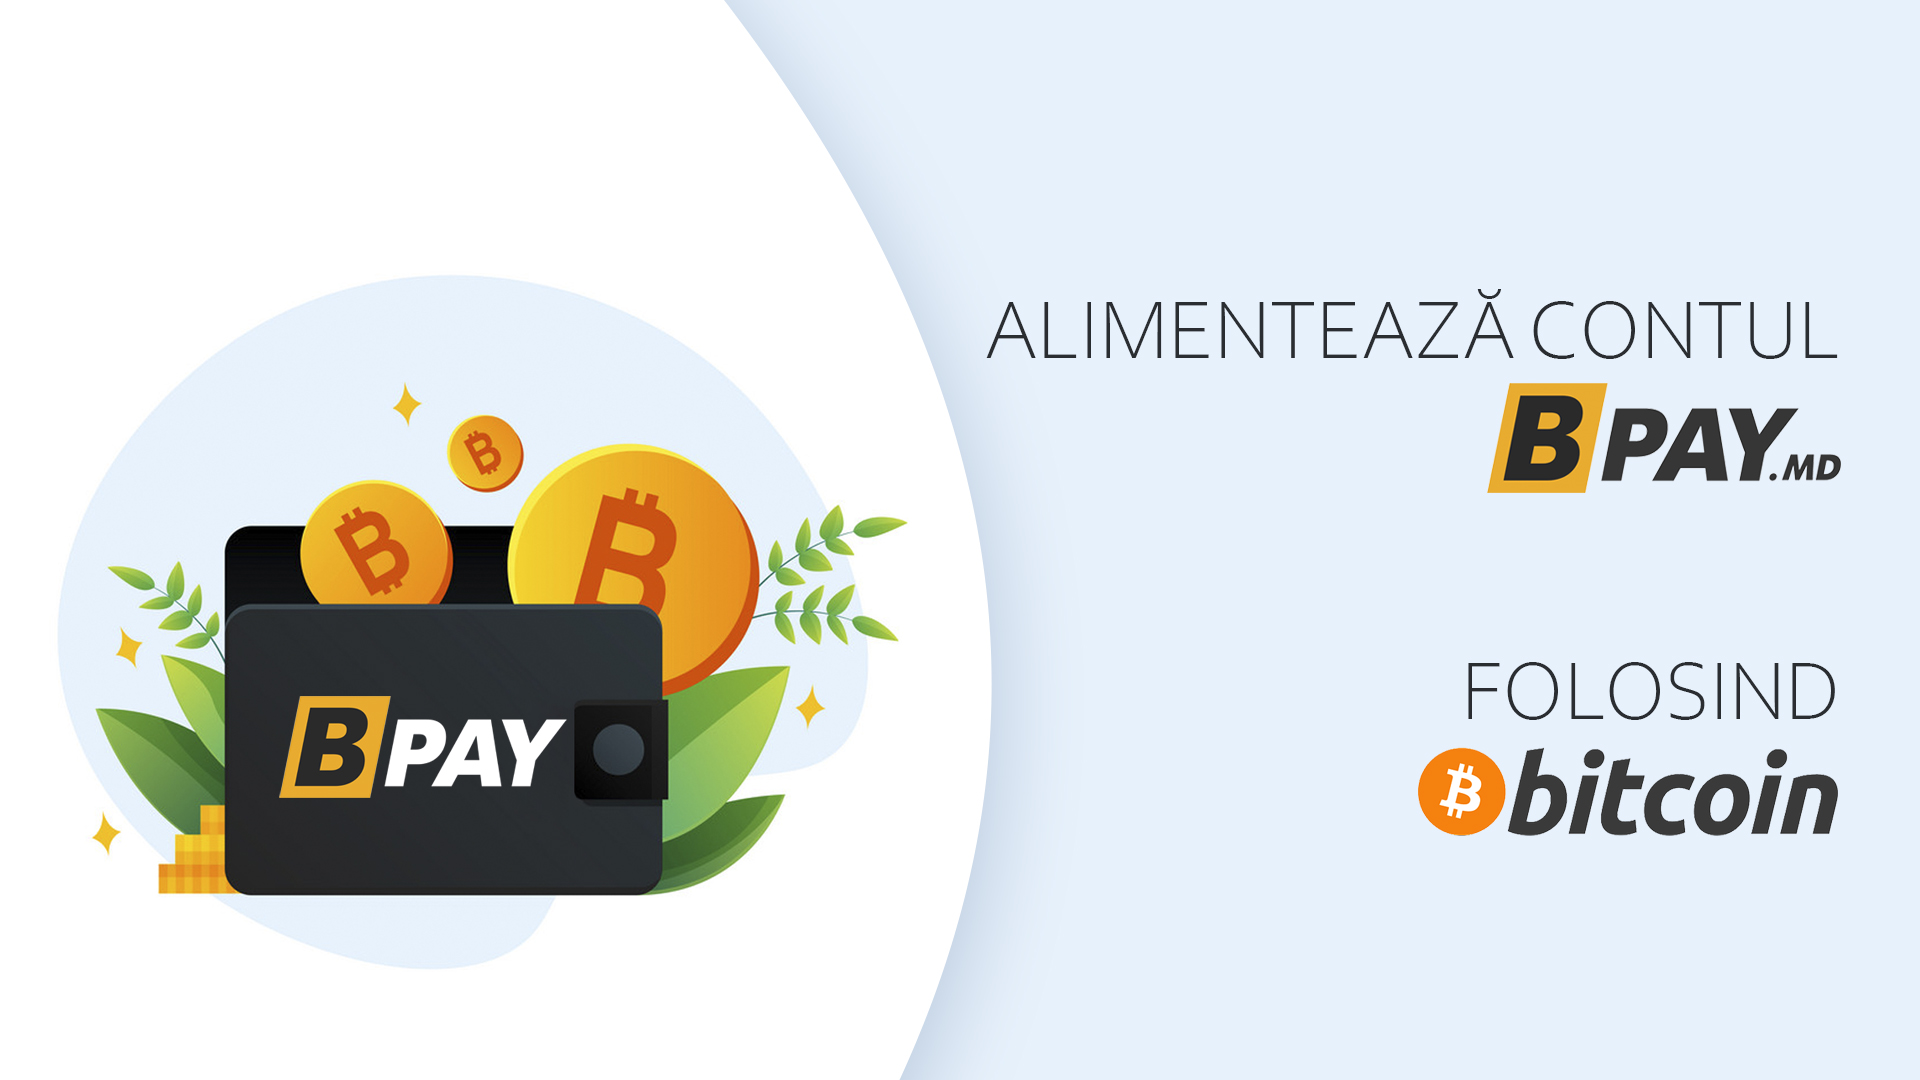 📢 Alimentarea contului Bpay prin criptomonedele Bitcoin